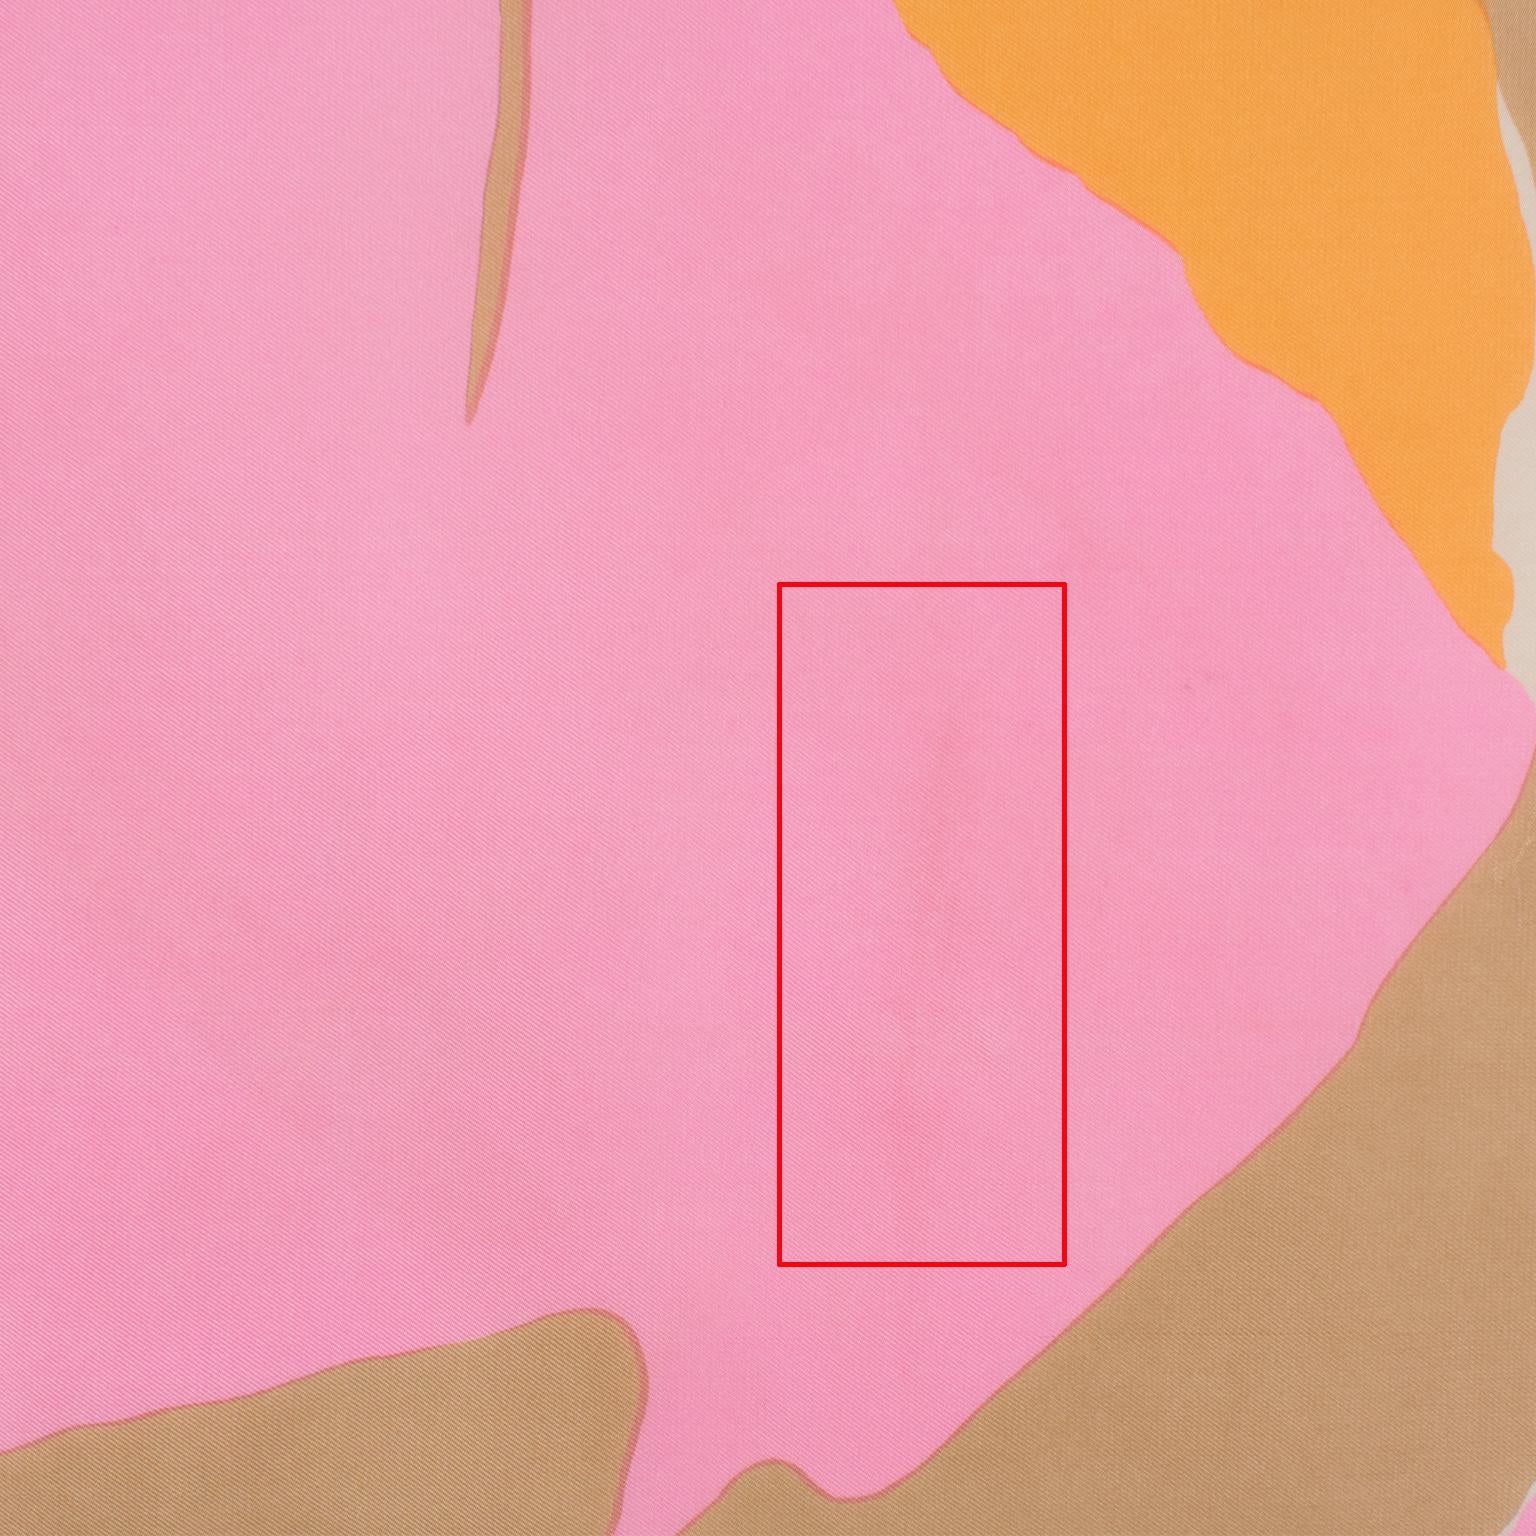 Nina Ricci Paris Silk Scarf Abstract 1970s Print in Pink and Orange 6